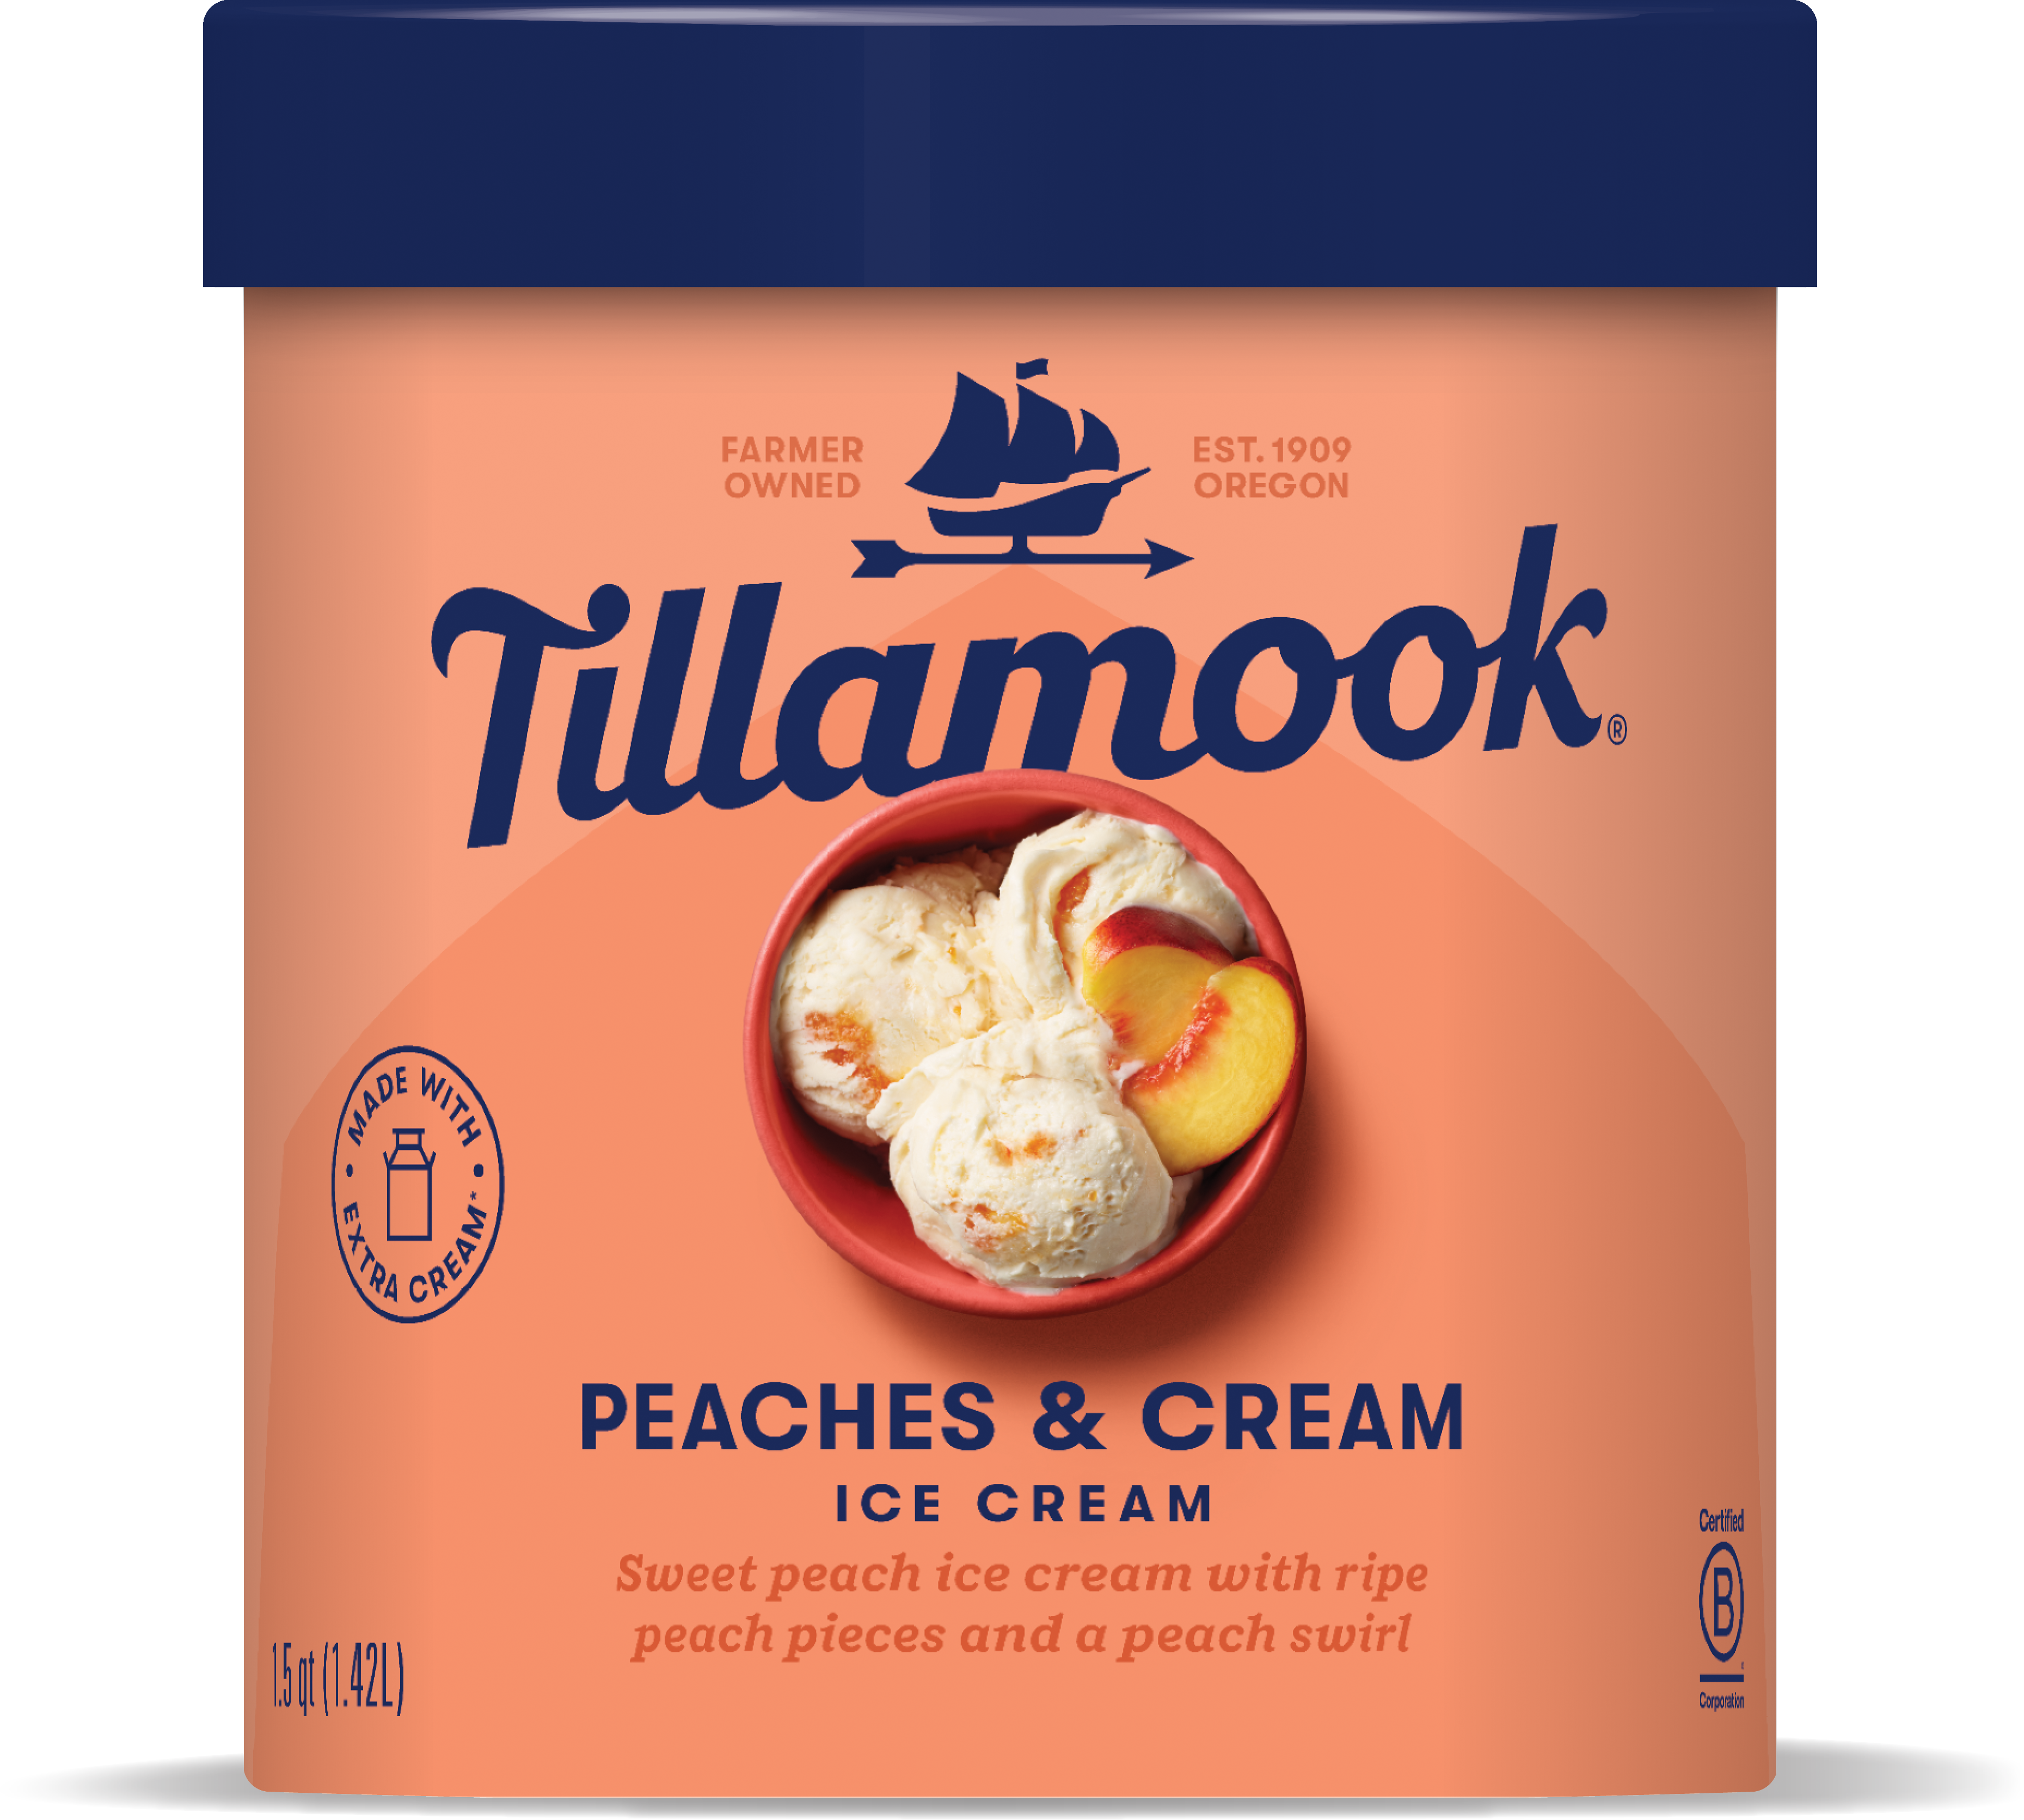 Peaches and Cream Ice Cream - Tillamook